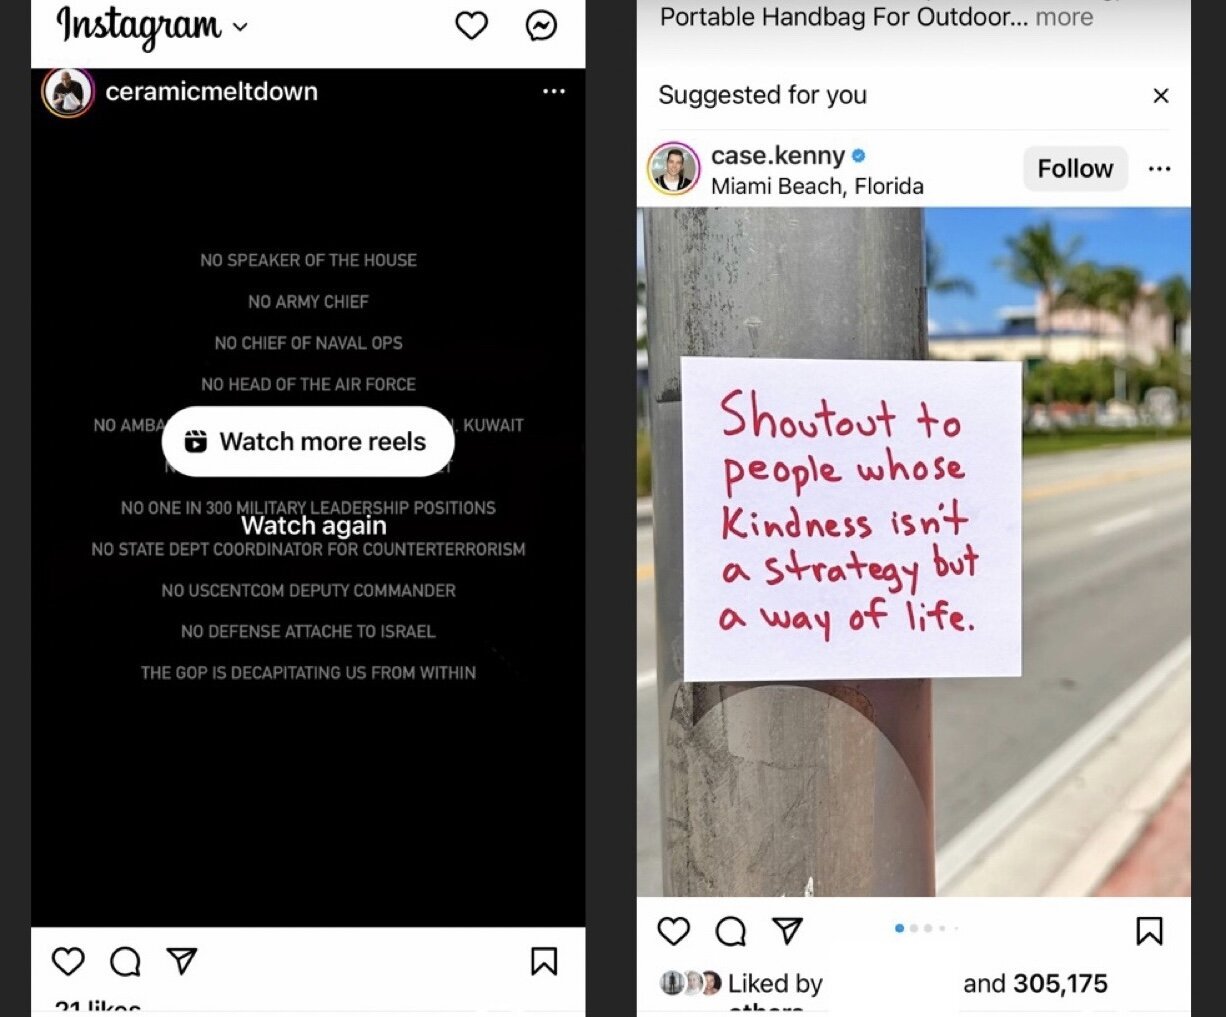 Instagram posts side by side, explained below